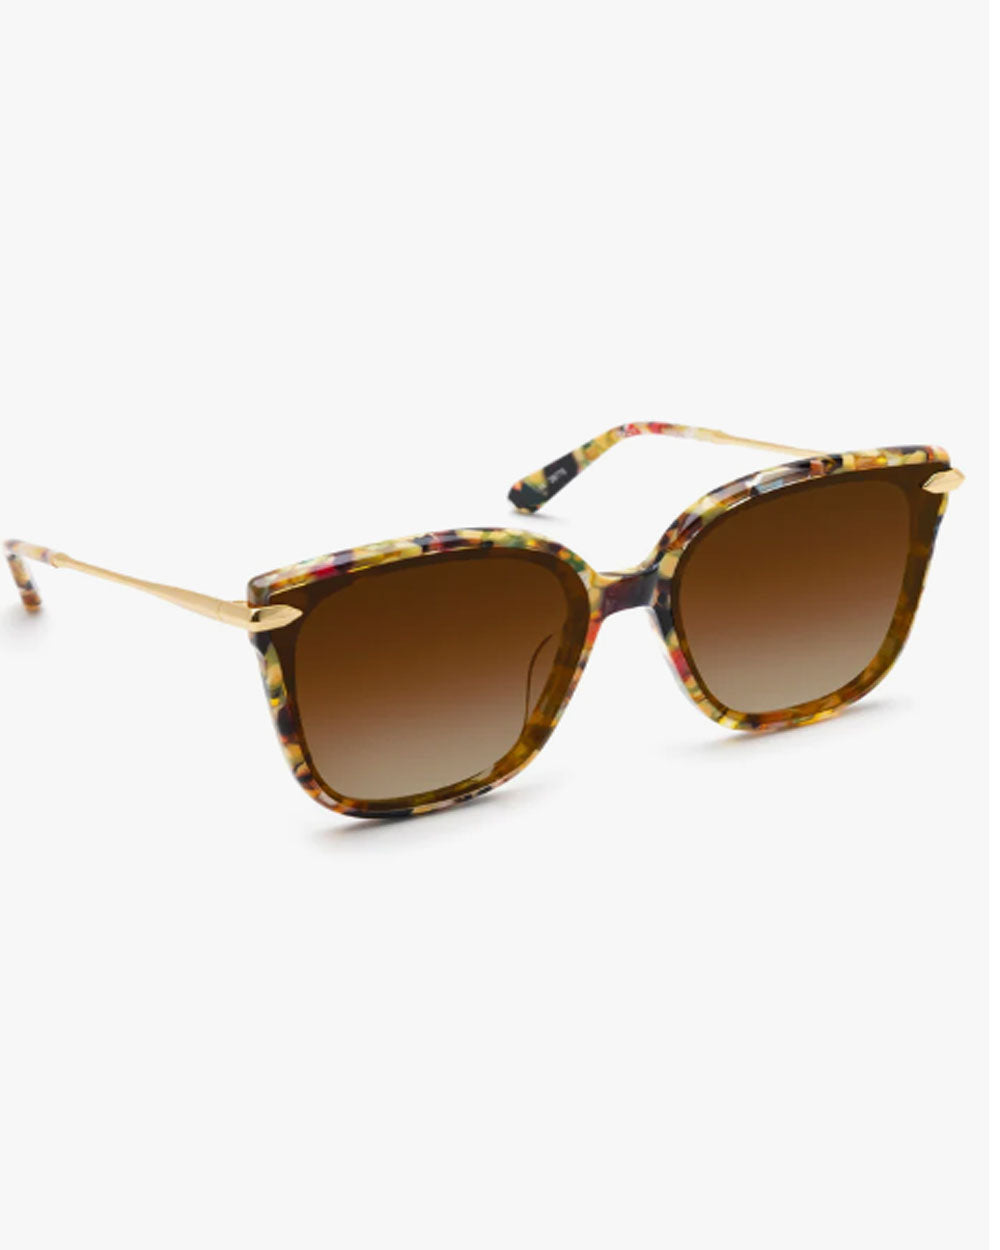 Dede Nylon Sunglasses in Canary 18K